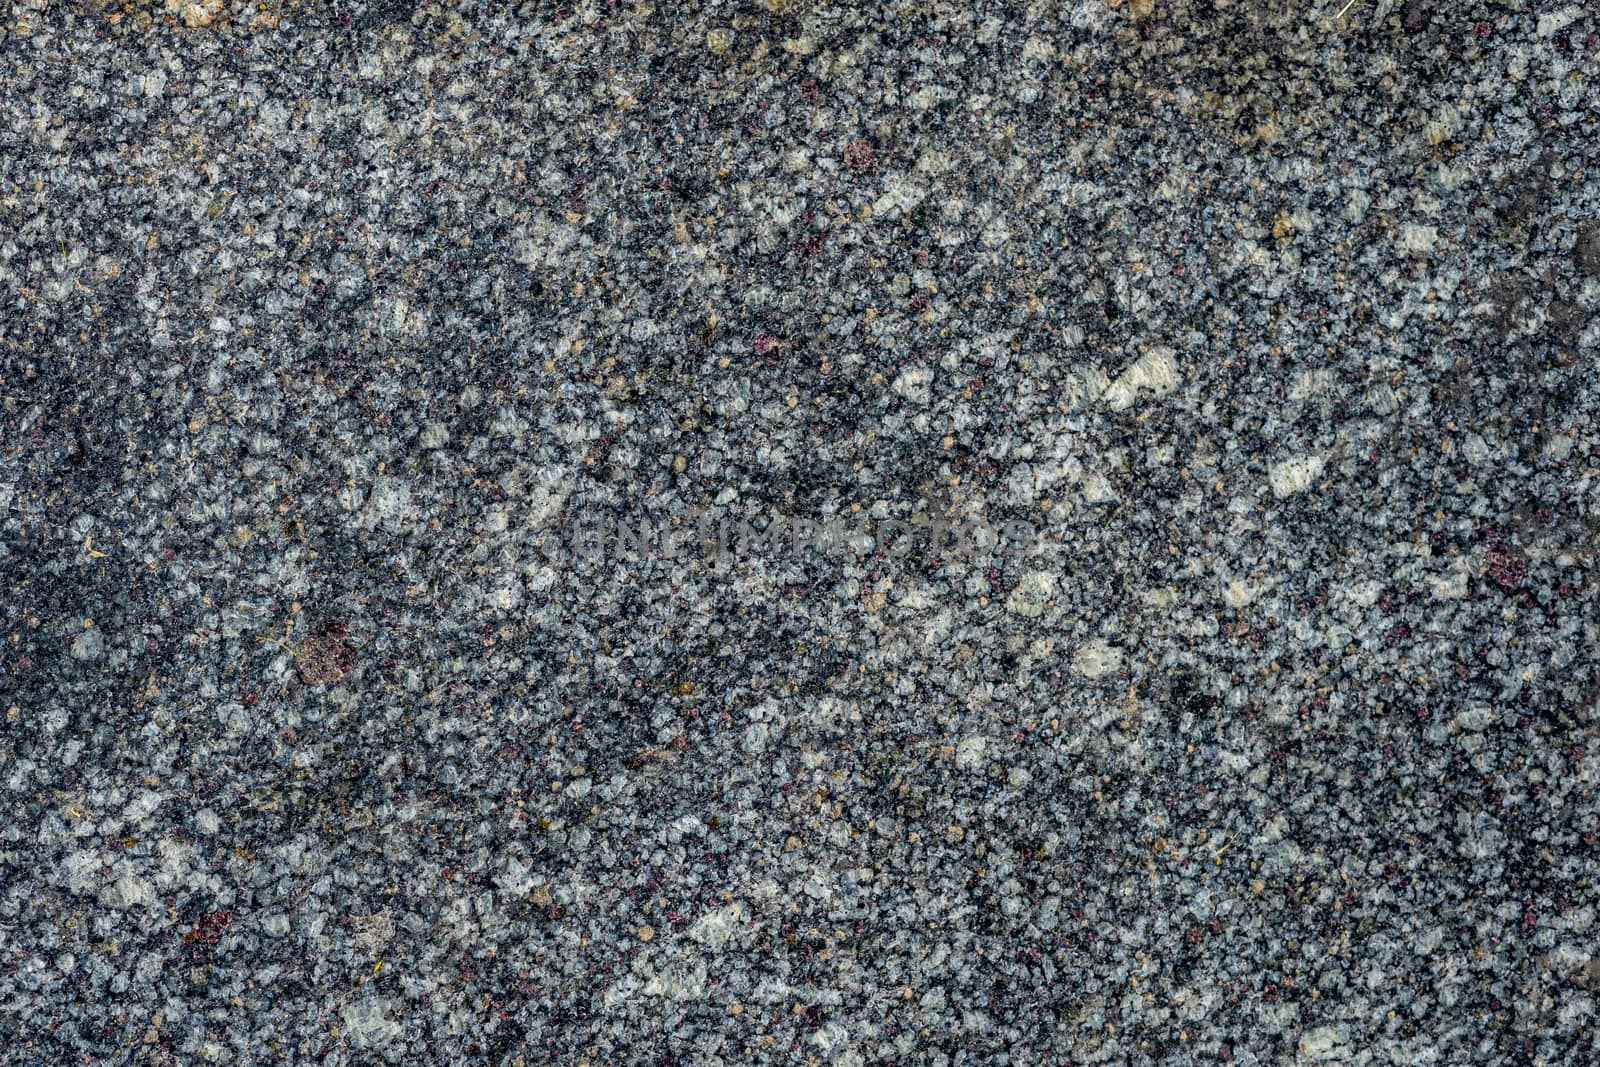 Texture of black polished granite. Granite tiles